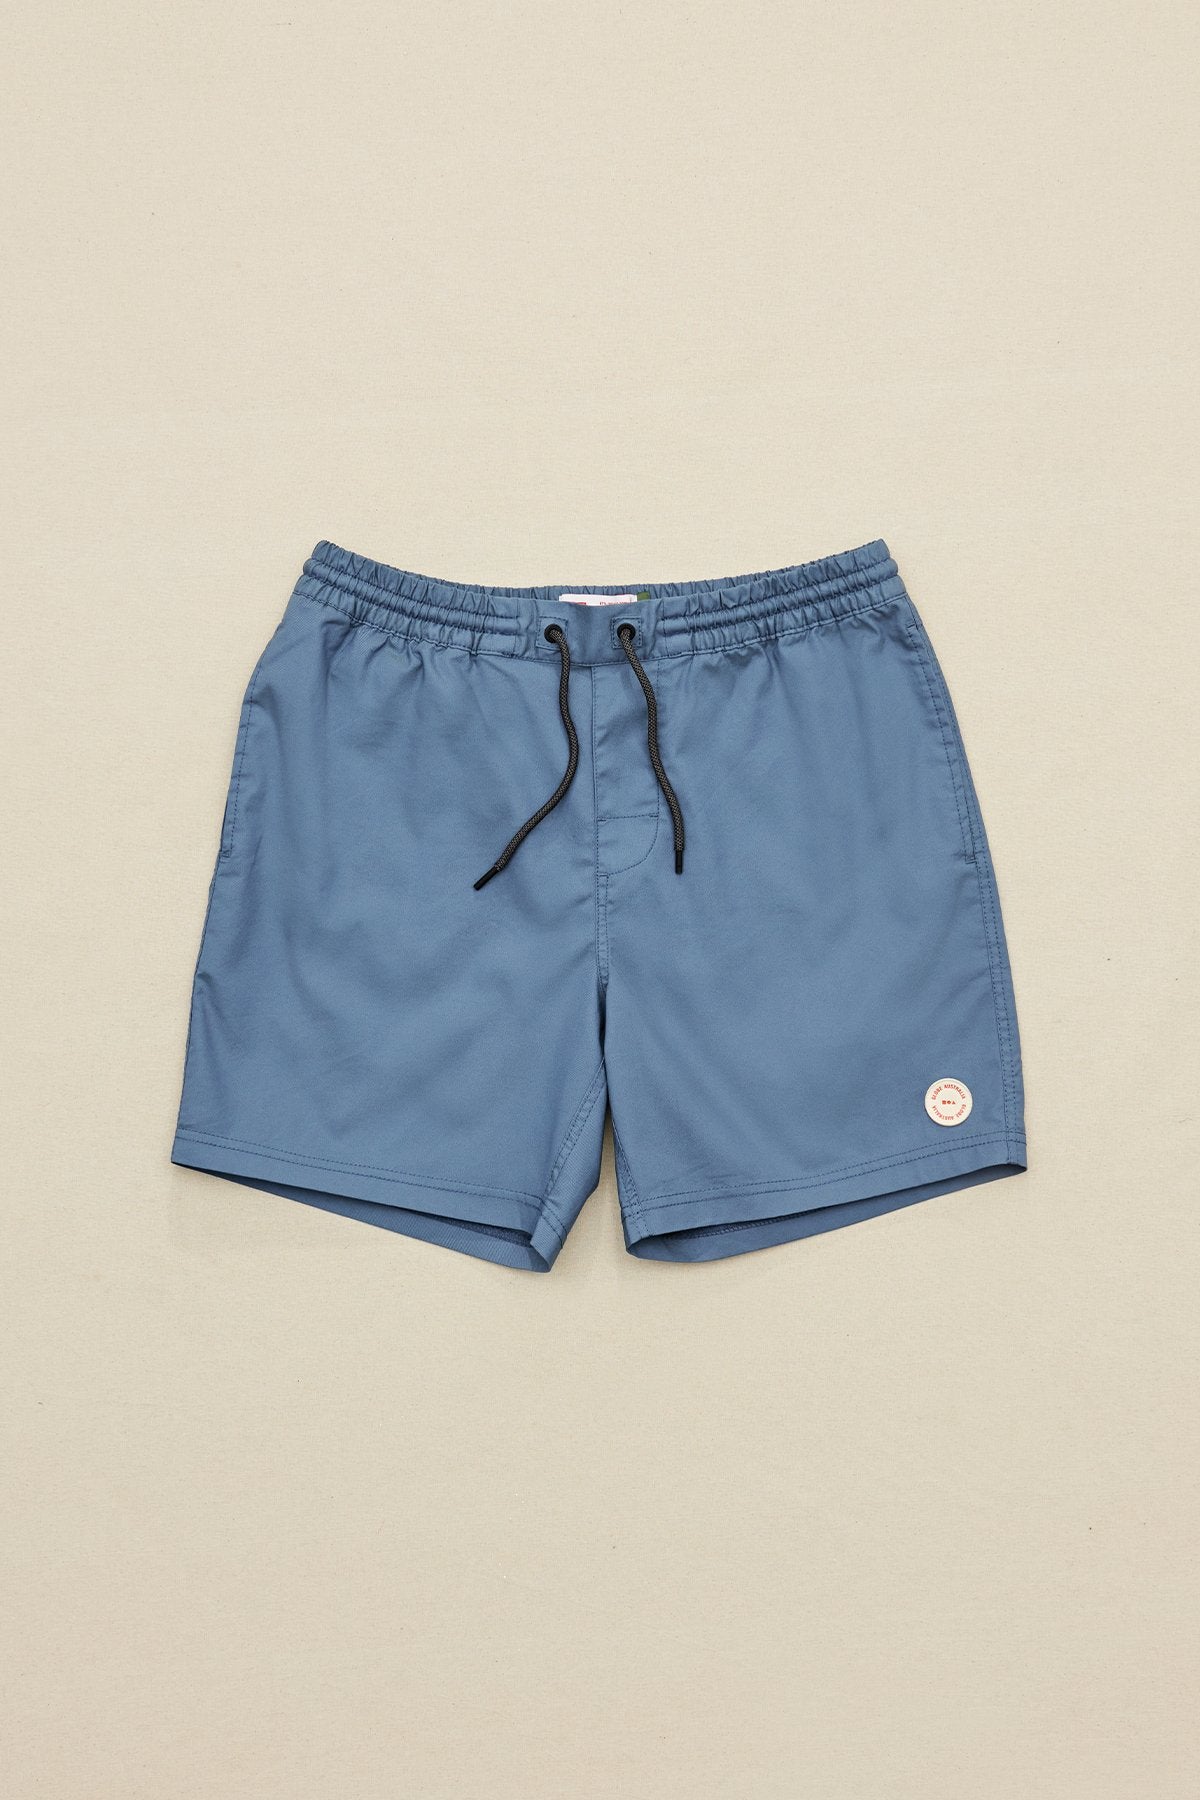 Globe Pantaloncini - Clean Swell Poolshort di colore Ardesia Blue